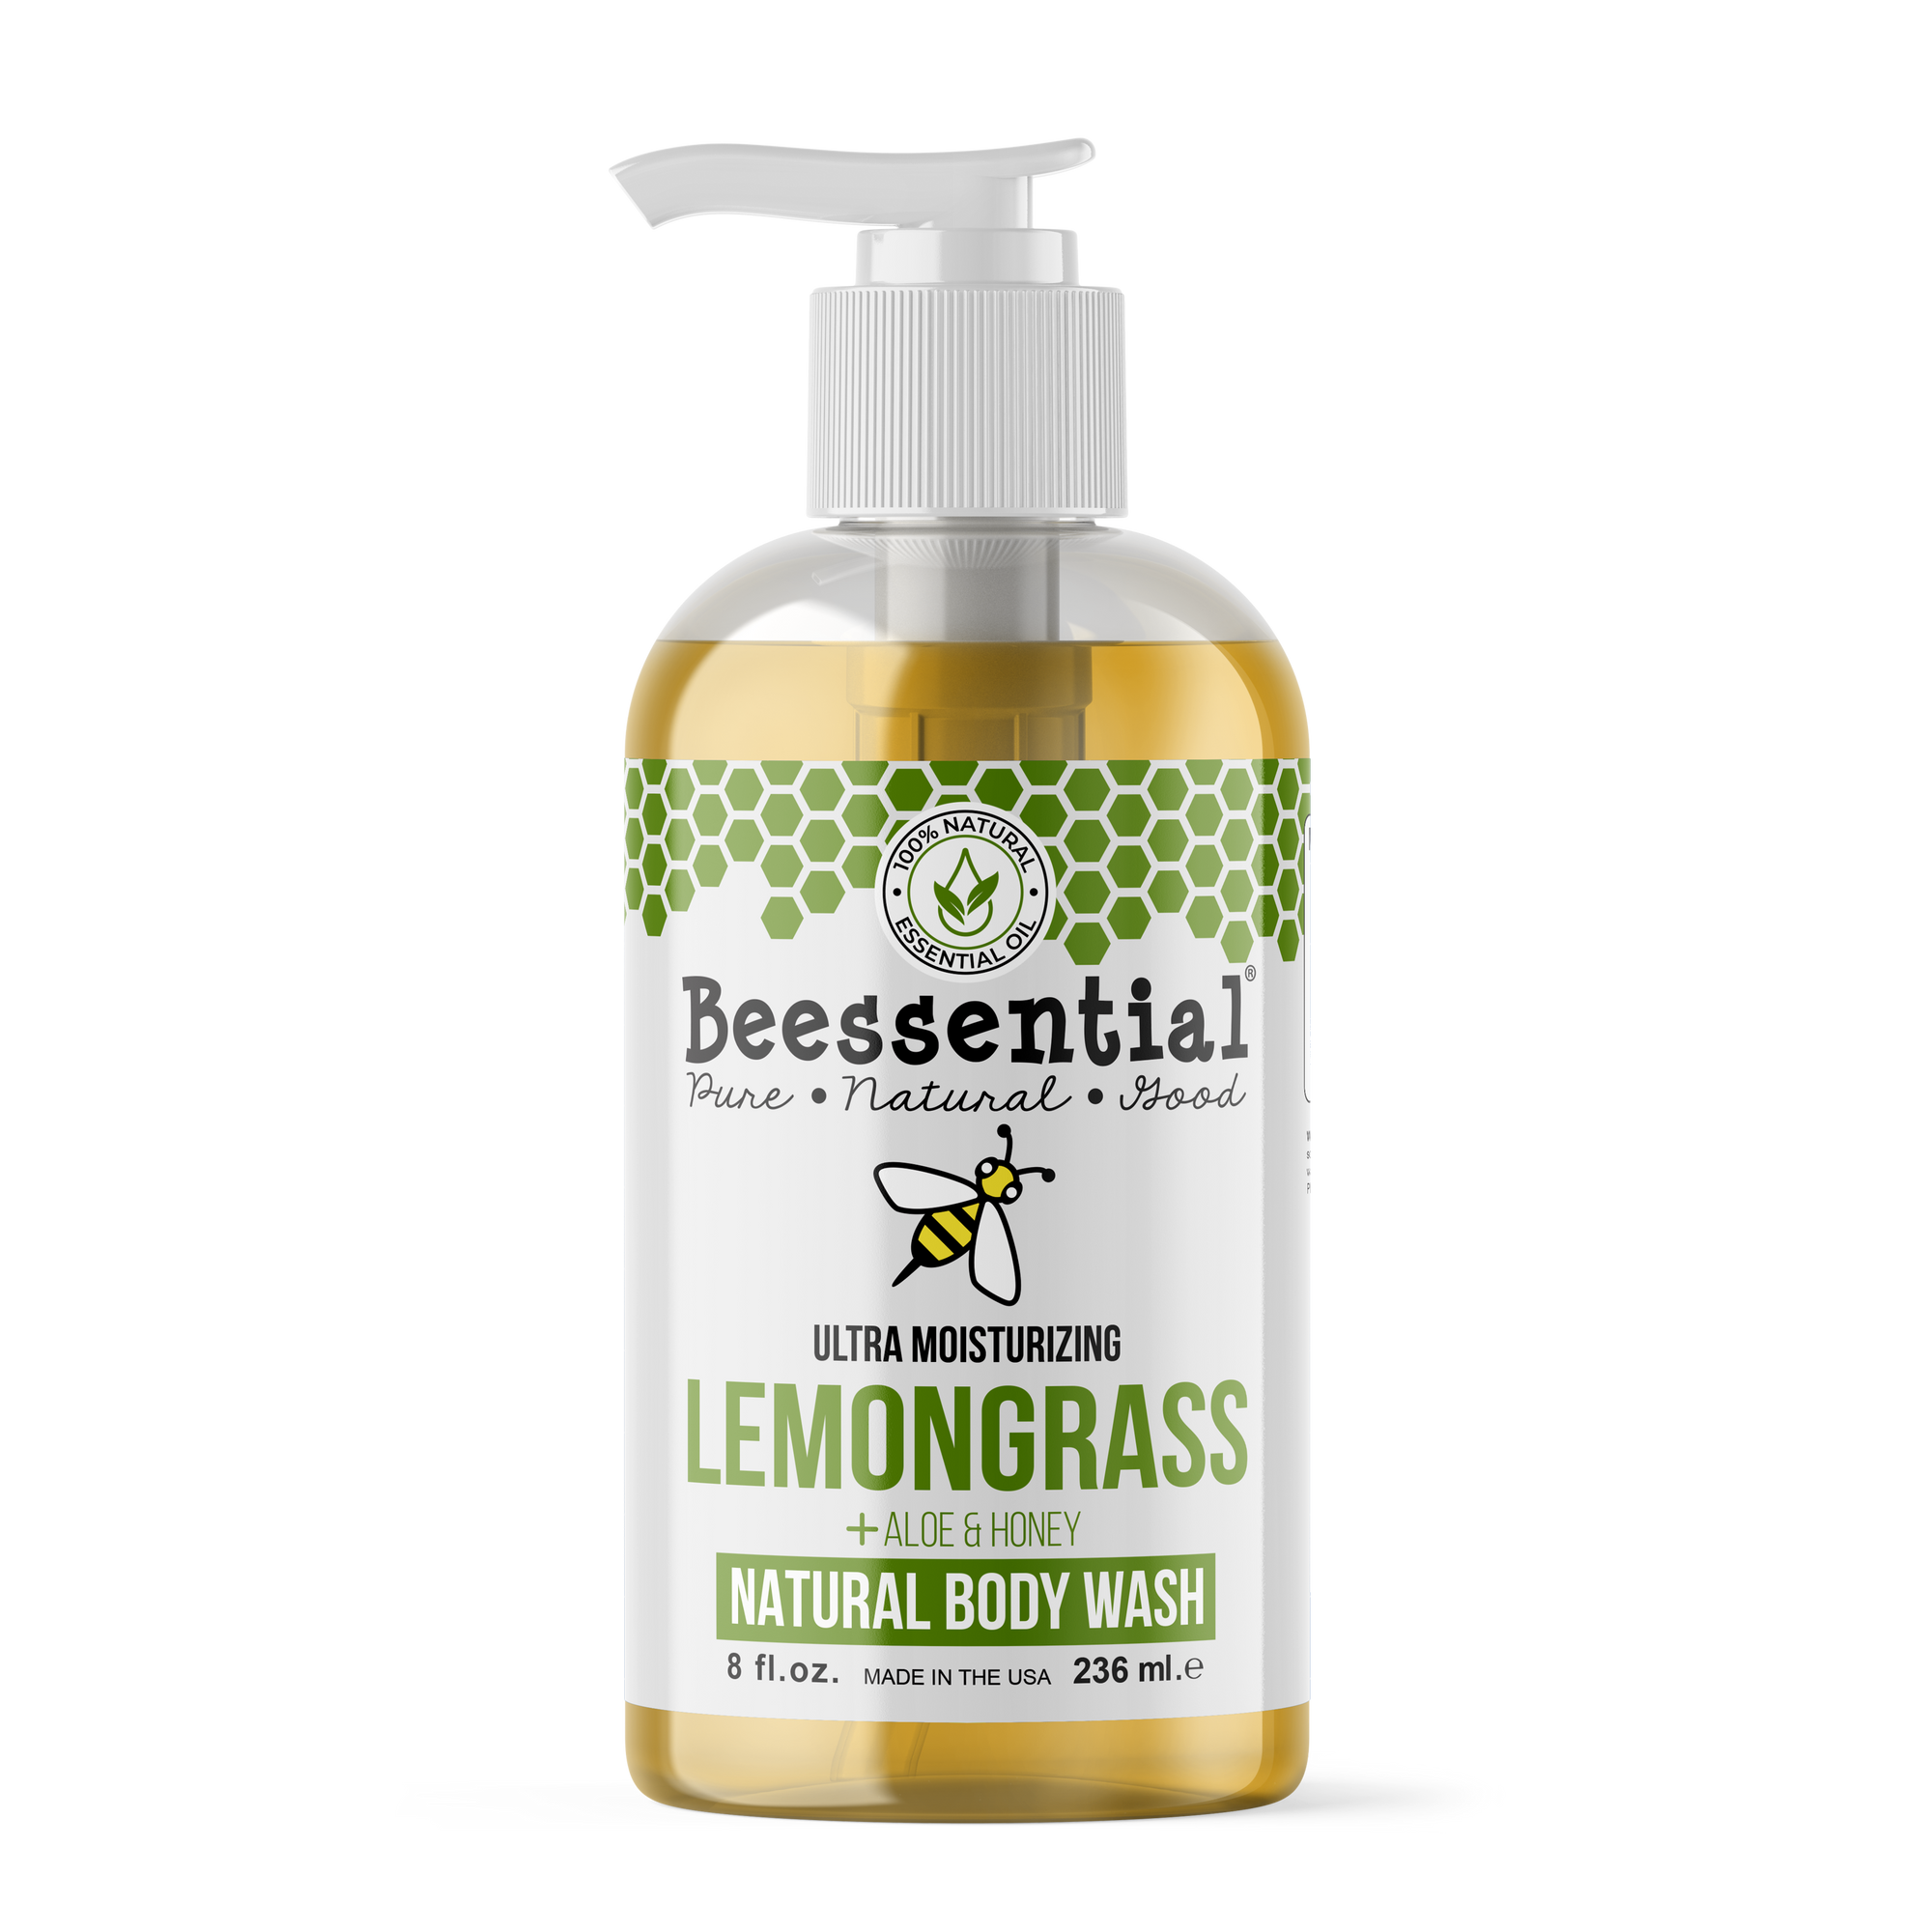 Lemongrass Body Products